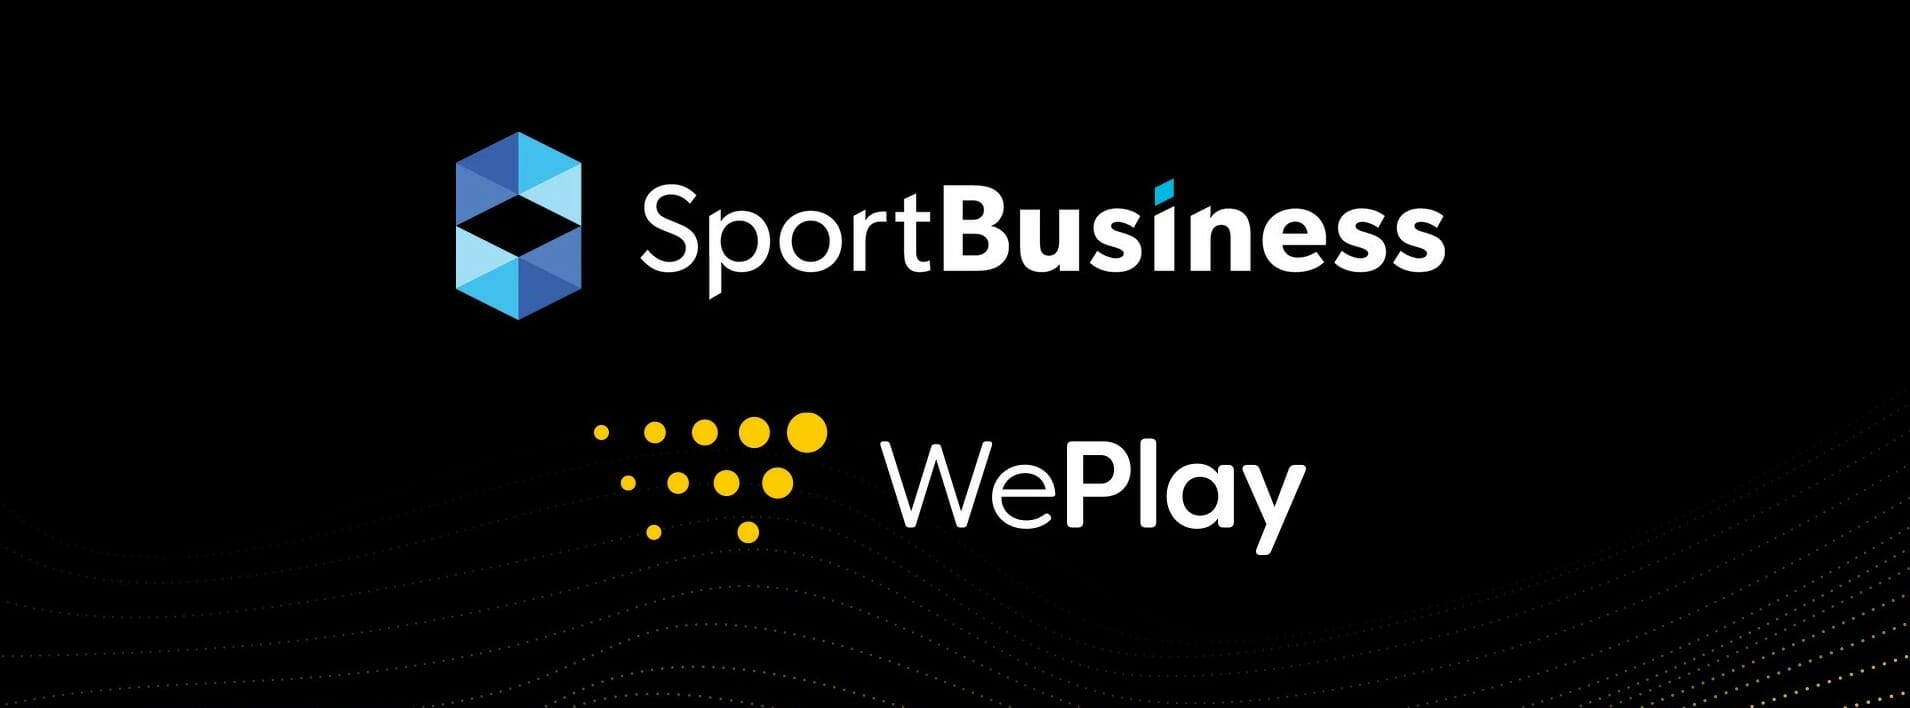 WePlay and SportBusiness partnership